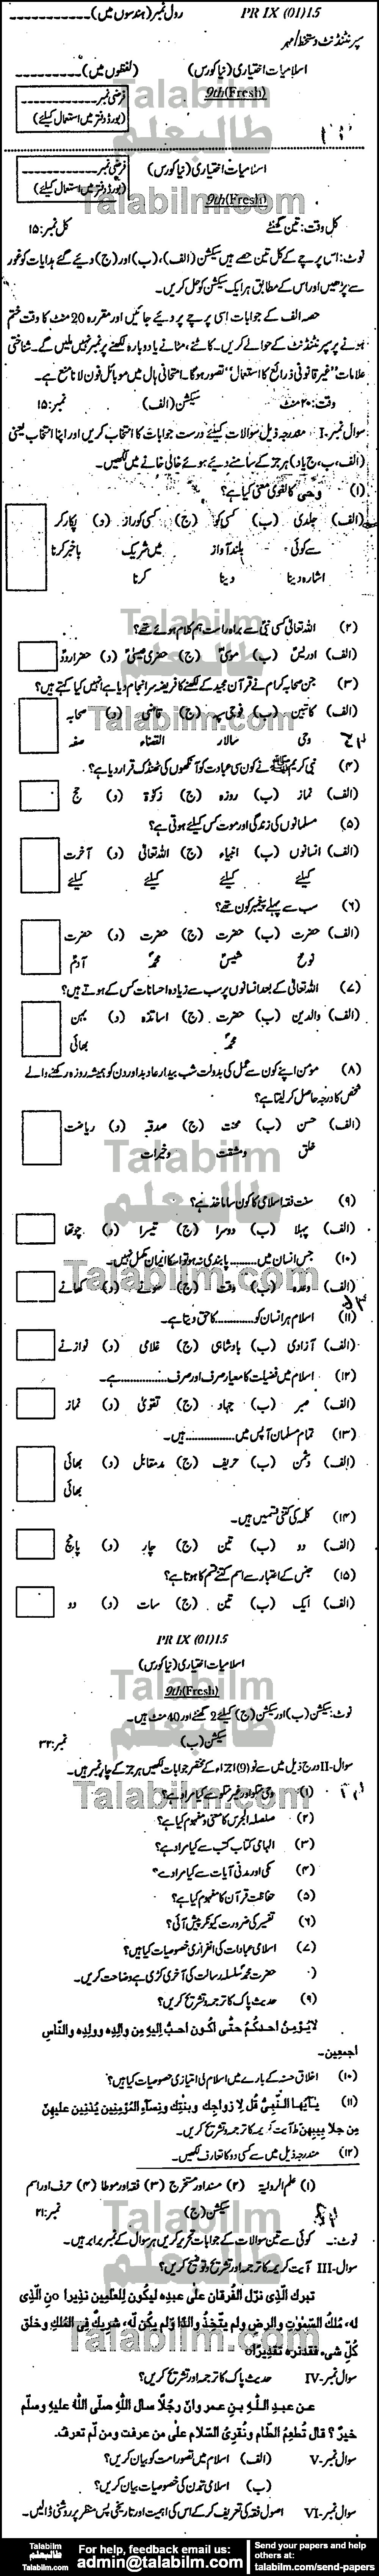 Islamiat Elective 0 past paper for Urdu Medium 2015 Group-I